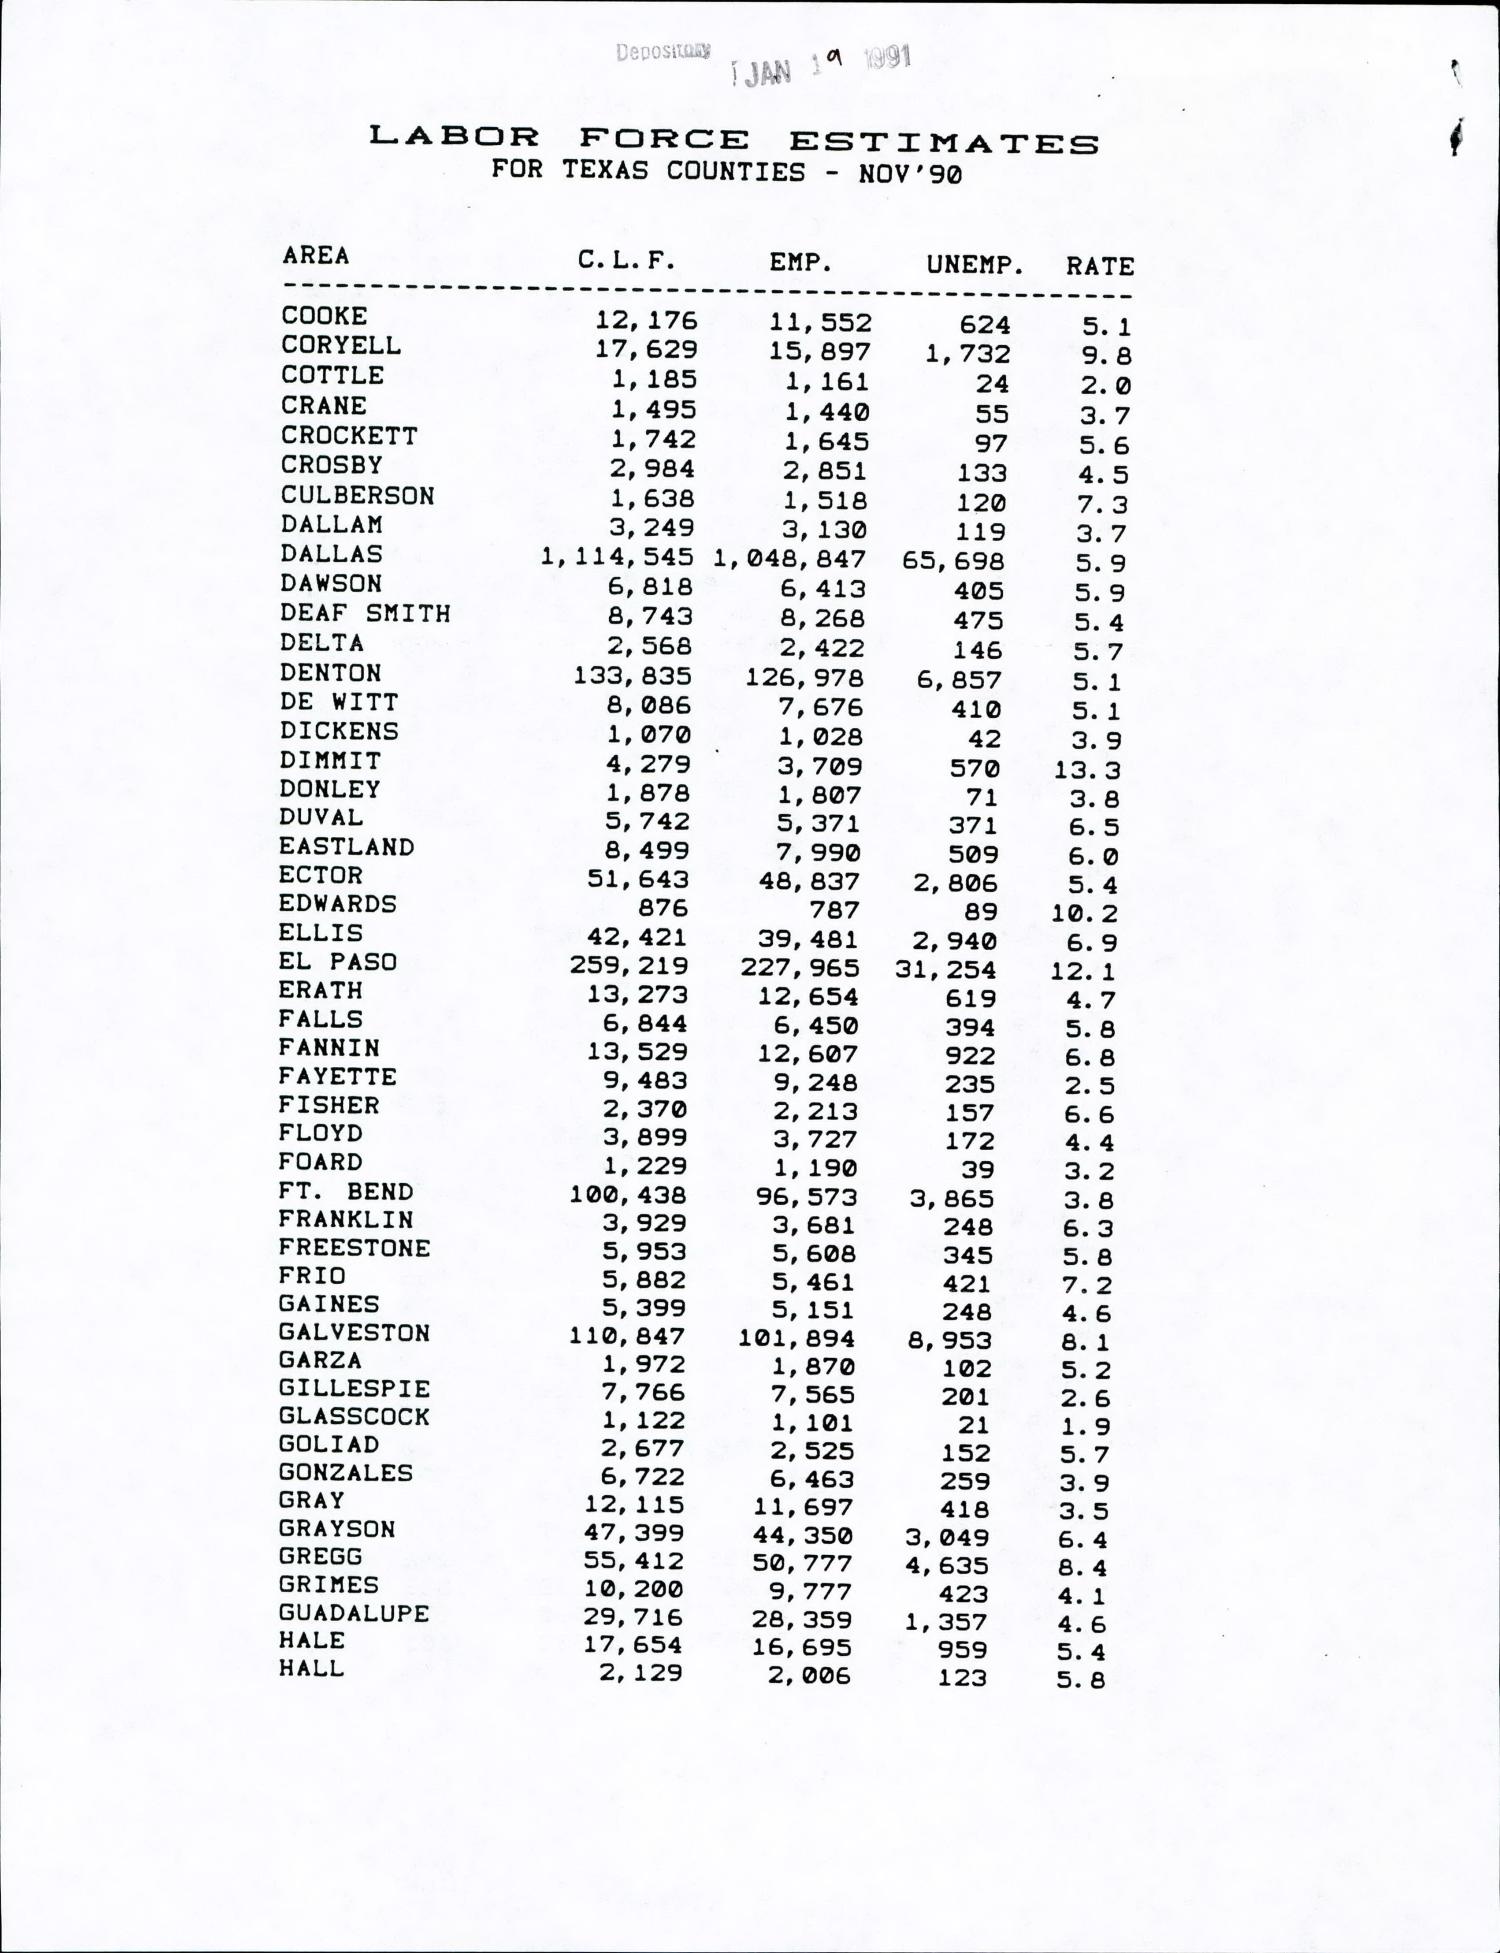 Labor Force Estimates for Texas Counties, November 1990
                                                
                                                    Labor Force Estimates
                                                